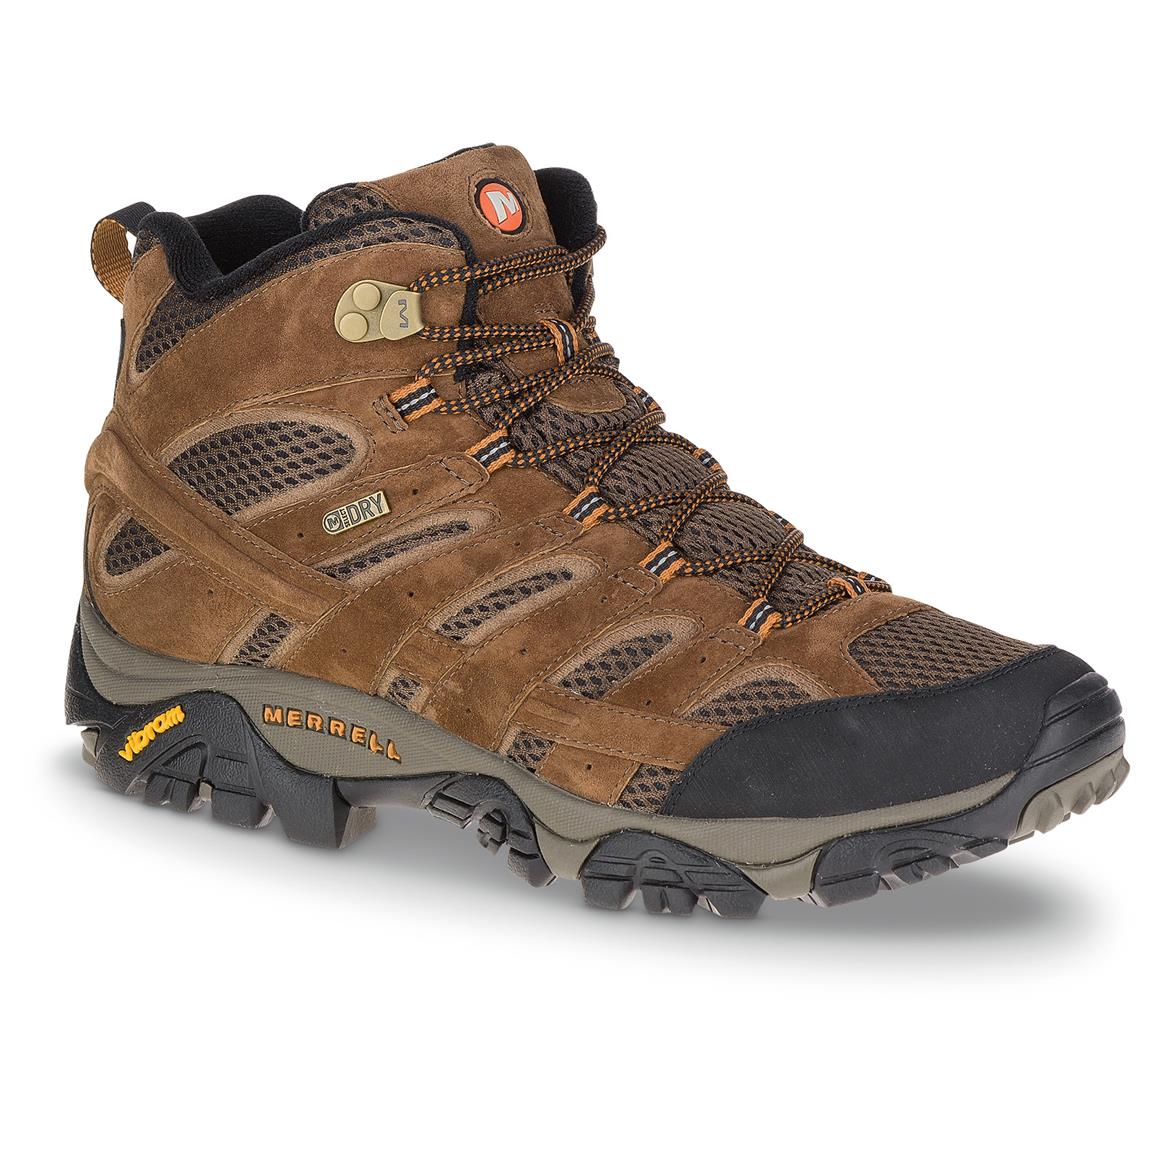 Merrell Men's Moab 2 Waterproof Mid Hiking Boots, Earth